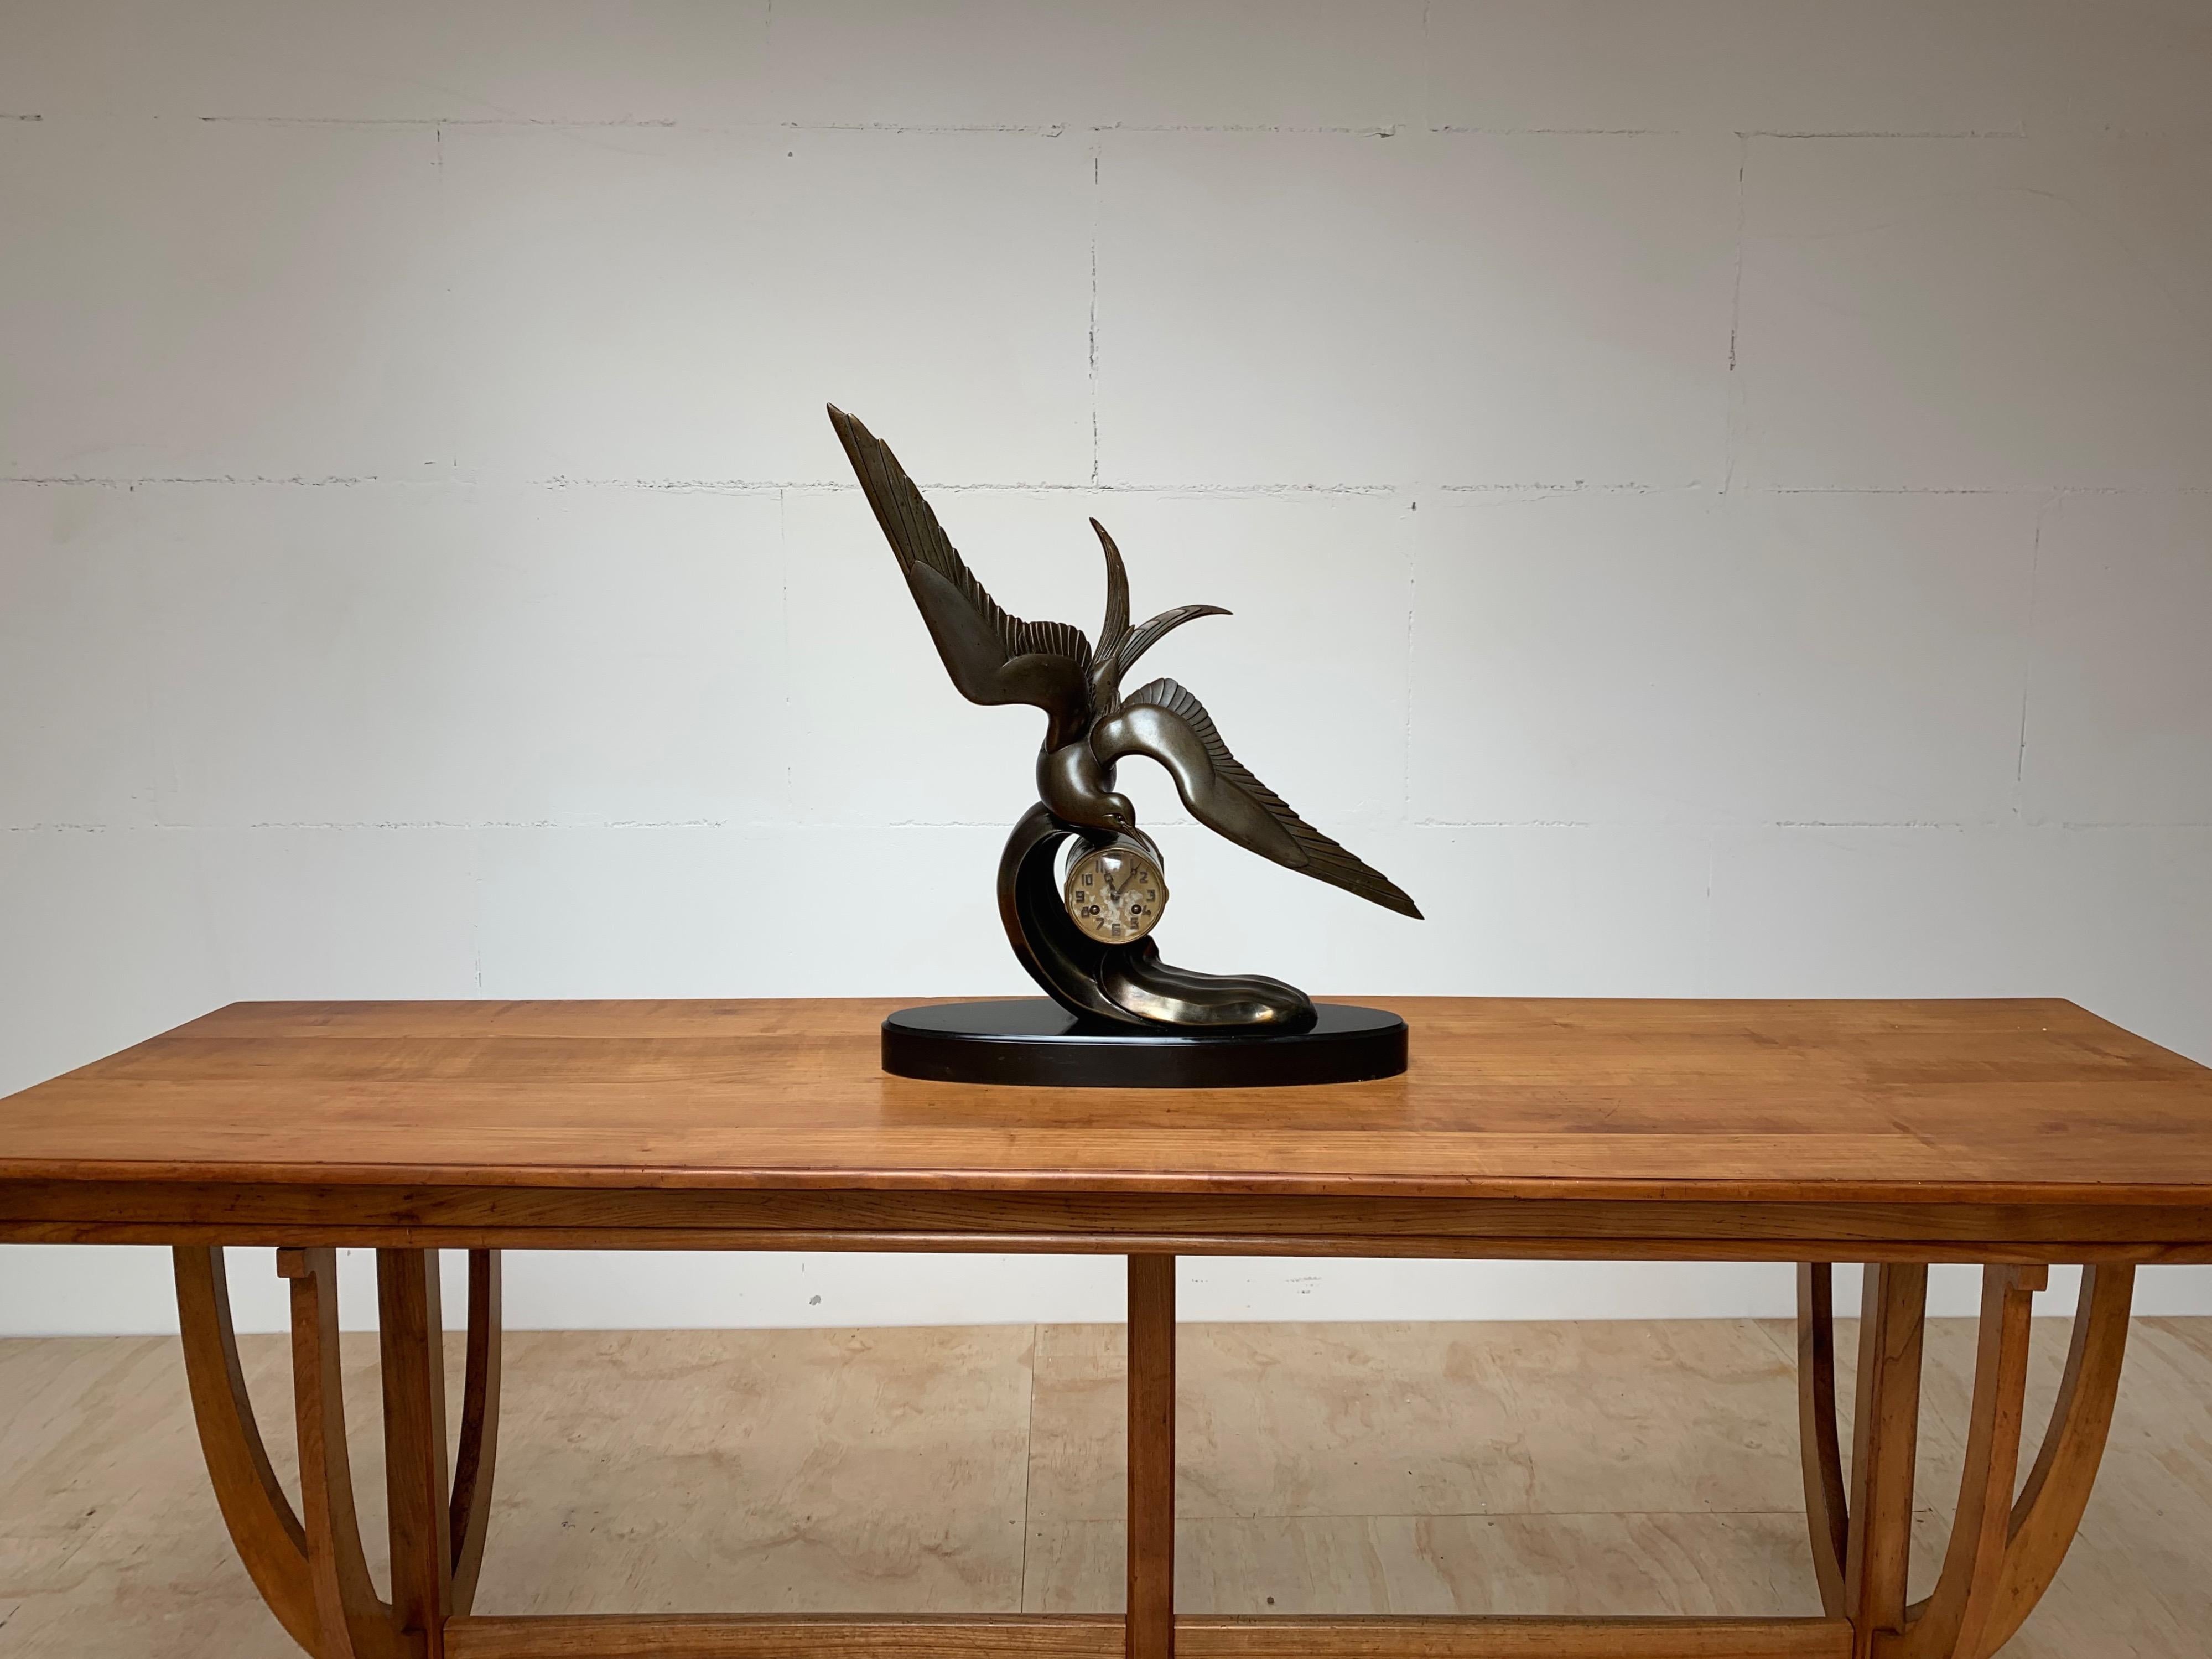 Bronzed Graceful Art Deco Table / Mantel Clock w Large Stylized Swallow Bird Sculpture For Sale